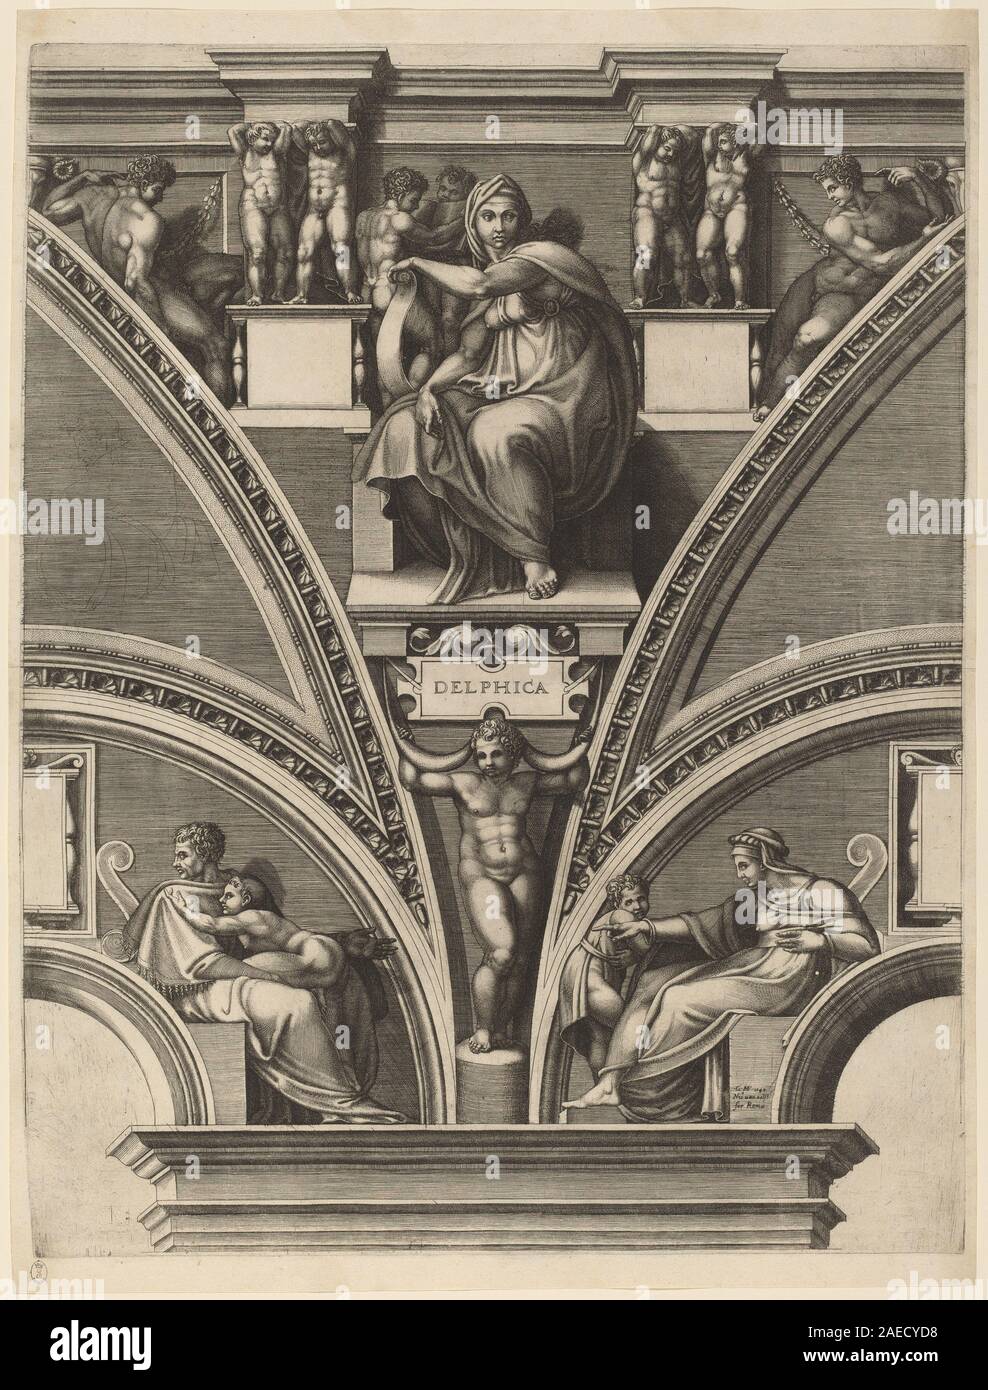 Giorgio Ghisi after Michelangelo, The Delphic Sibyl, early 1570s The Delphic Sibyl; early 1570s Stock Photo